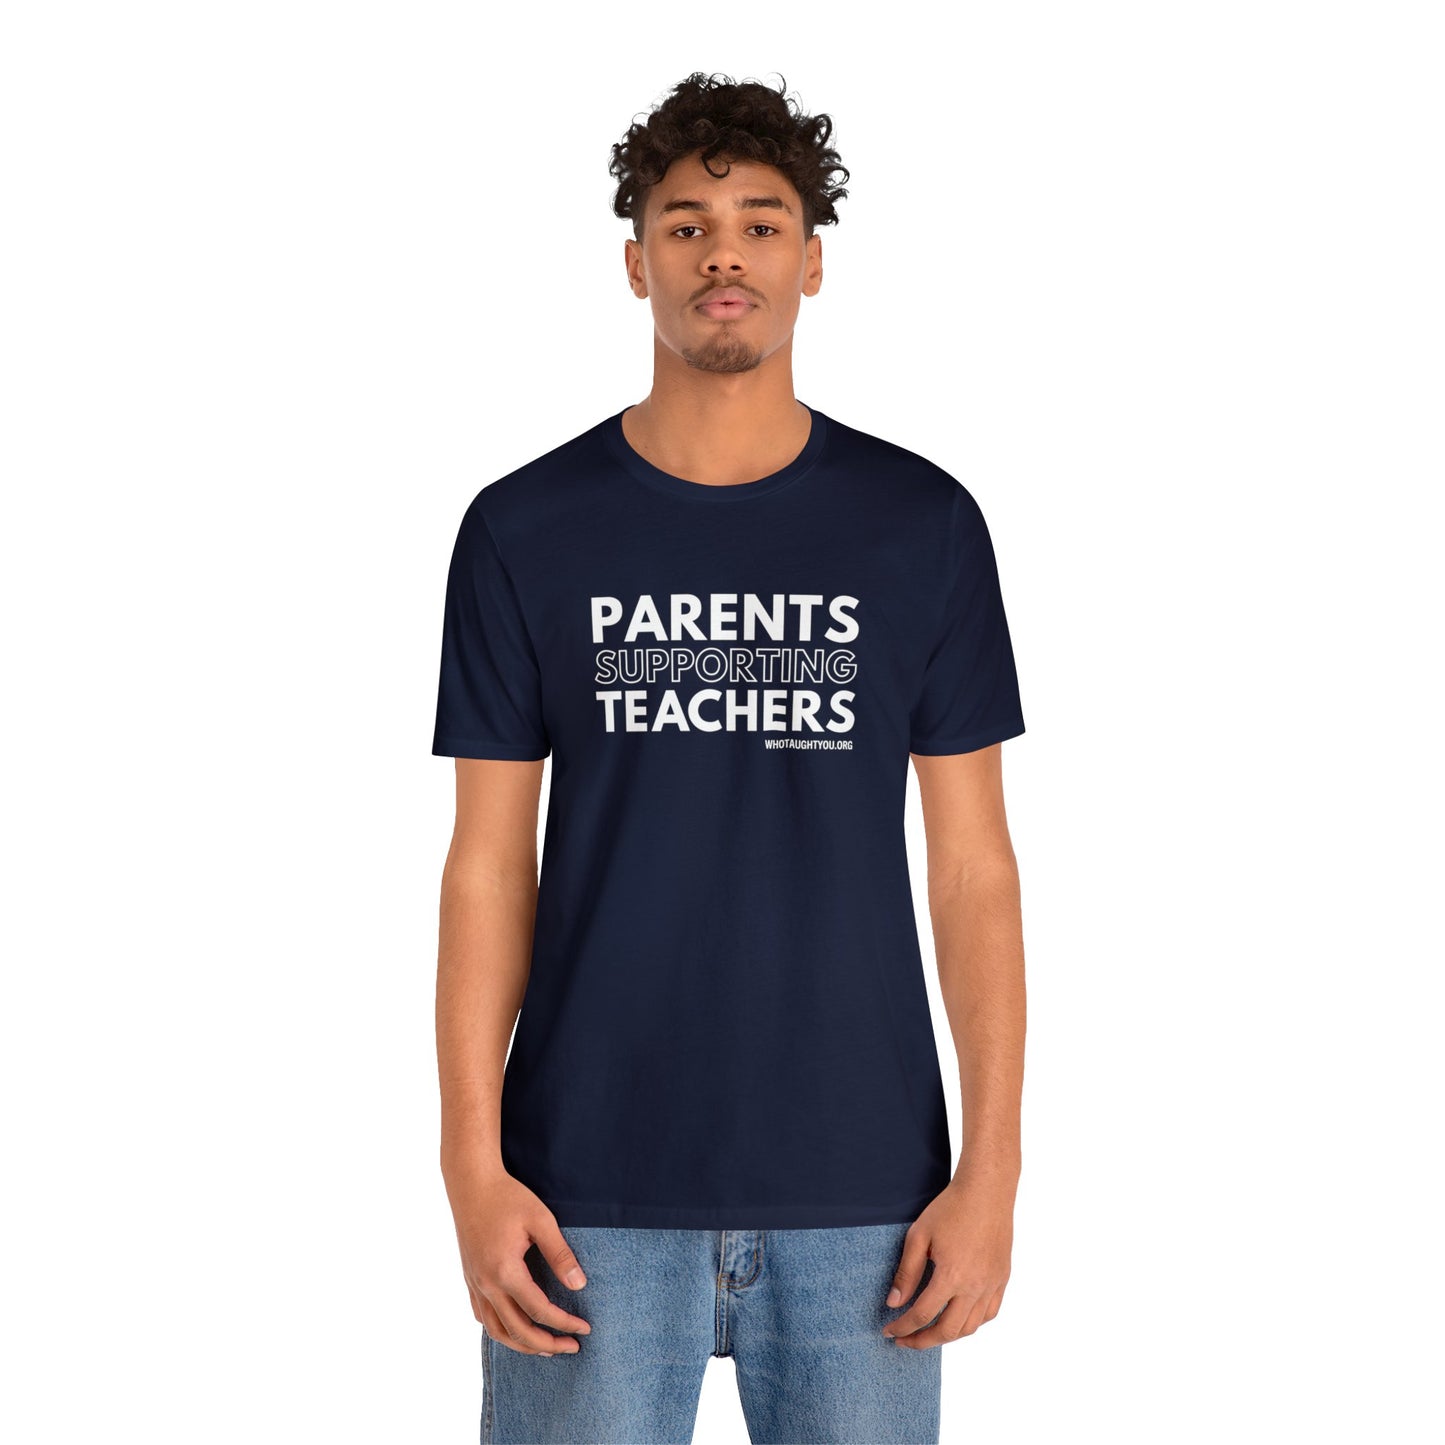 PARENTS SUPPORTING TEACHERS Tri-blend T-shirt